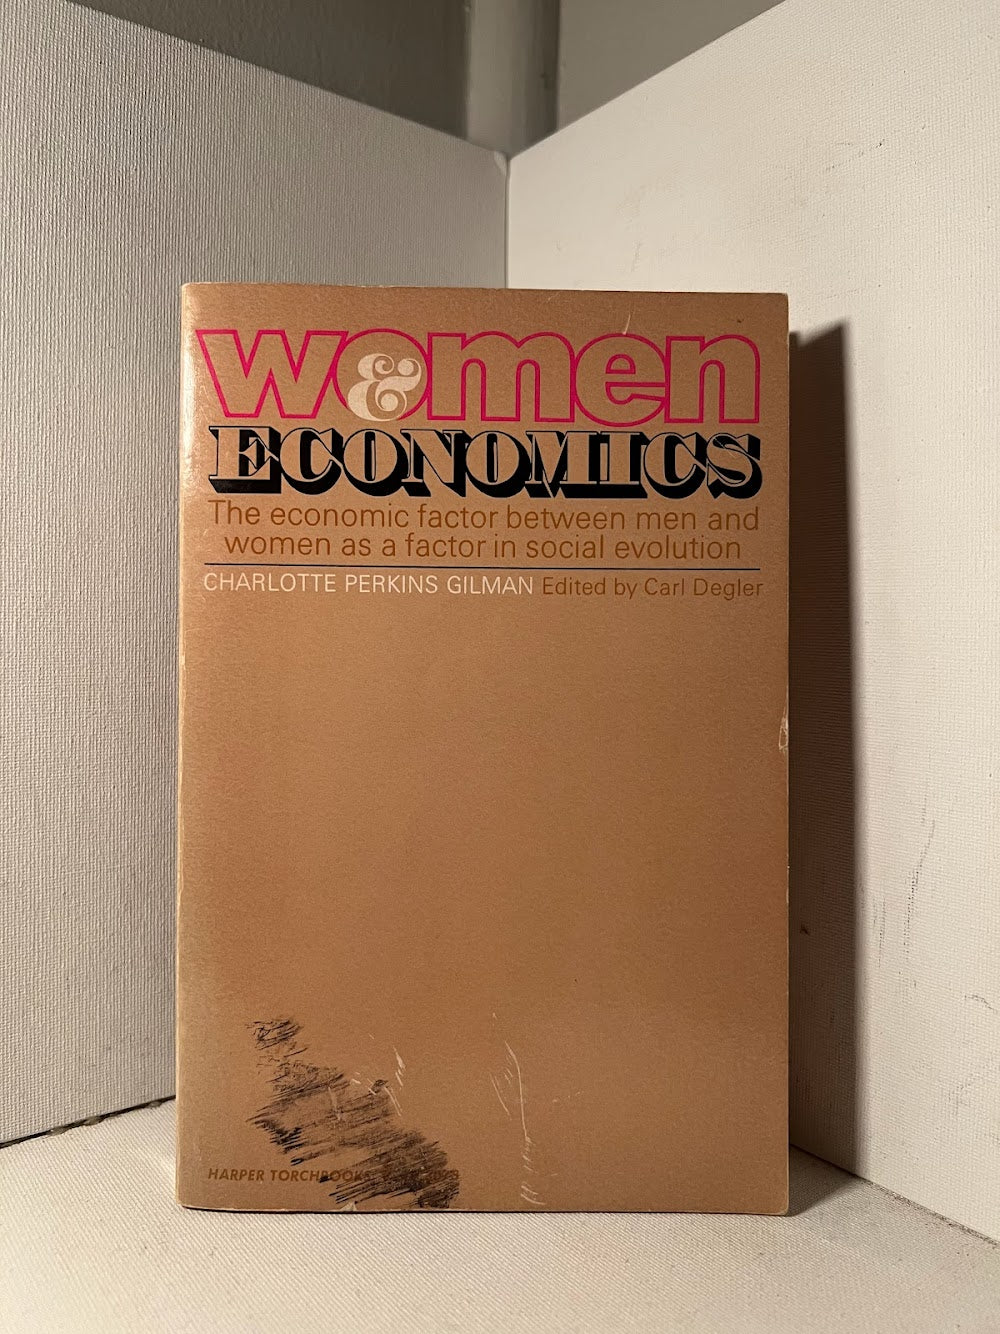 Women & Economics by Charlotte Perkins Gilman